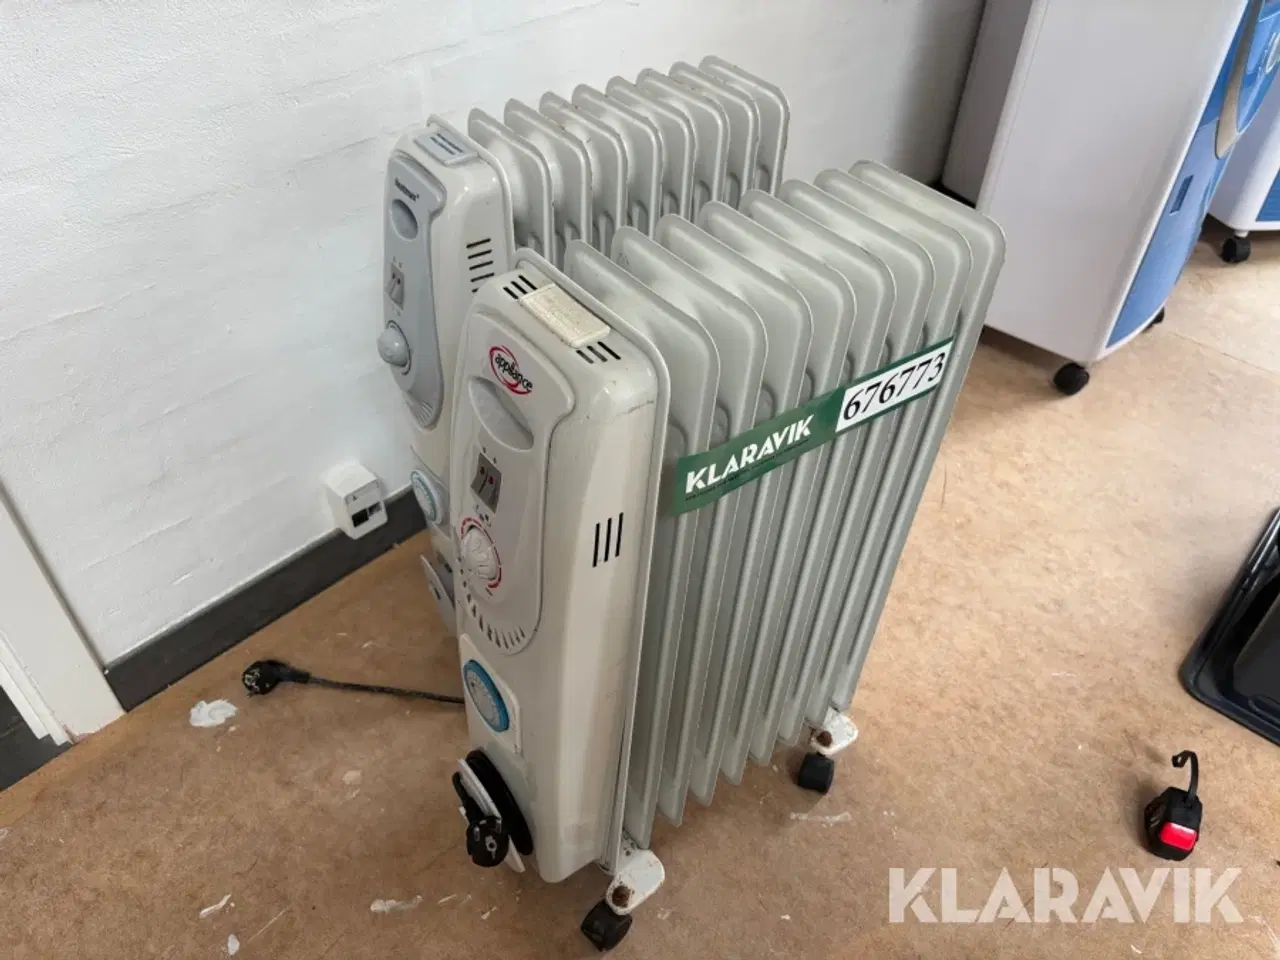 Billede 1 - El radiator 2 stk